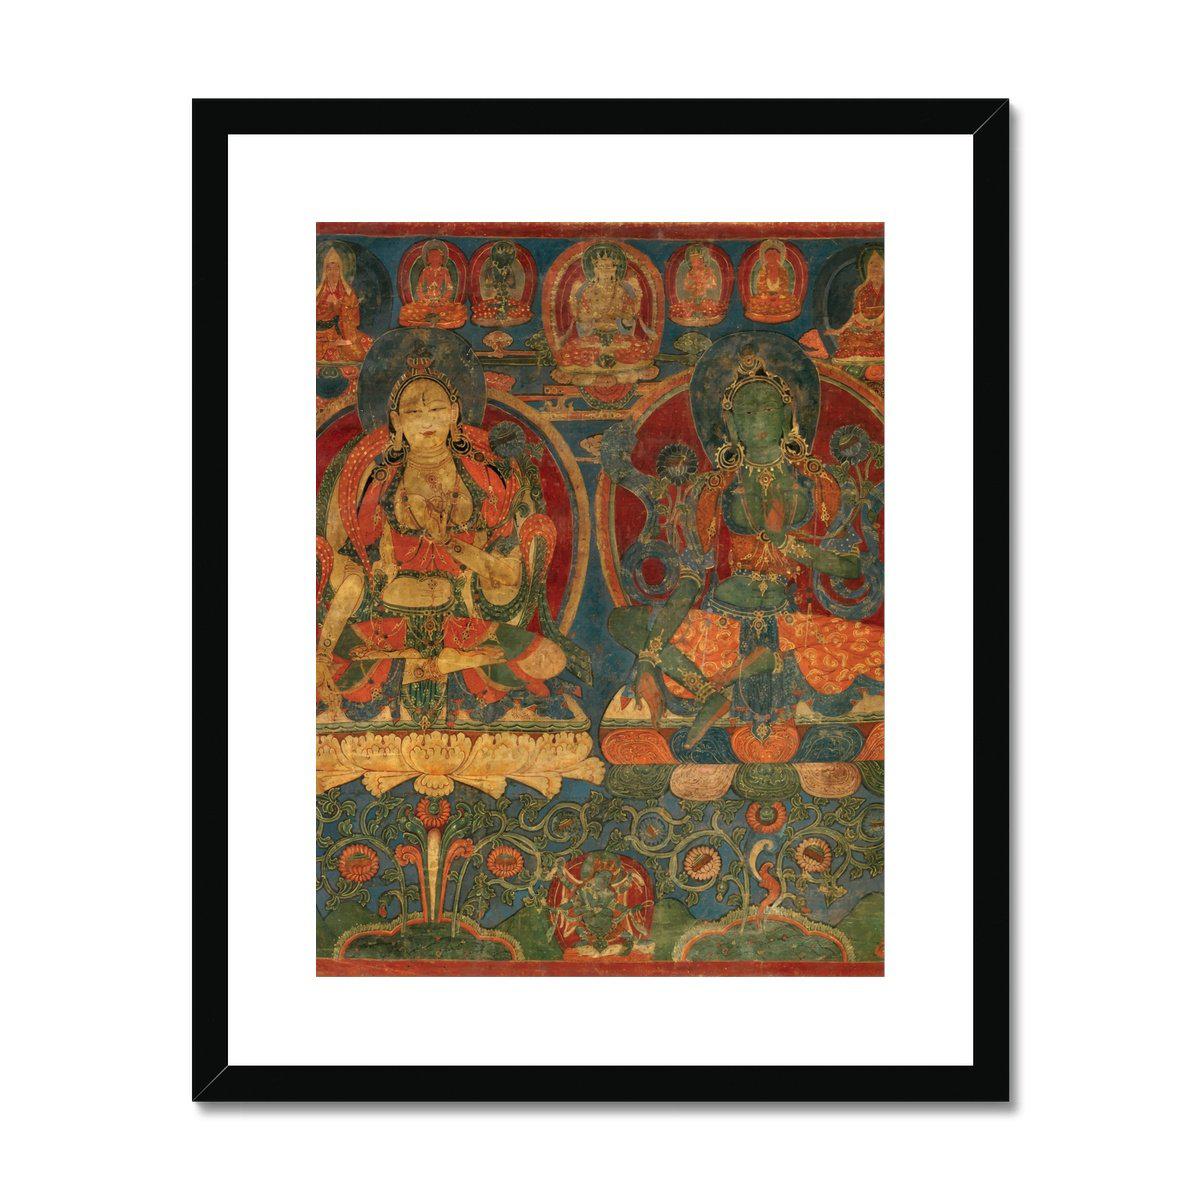 Framed Print Green Tara White Tara Tibetan Buddhist Thangka Tantra Hindu Vedic Antique Nepal Vintage Yantra Mandala Framed Art Print